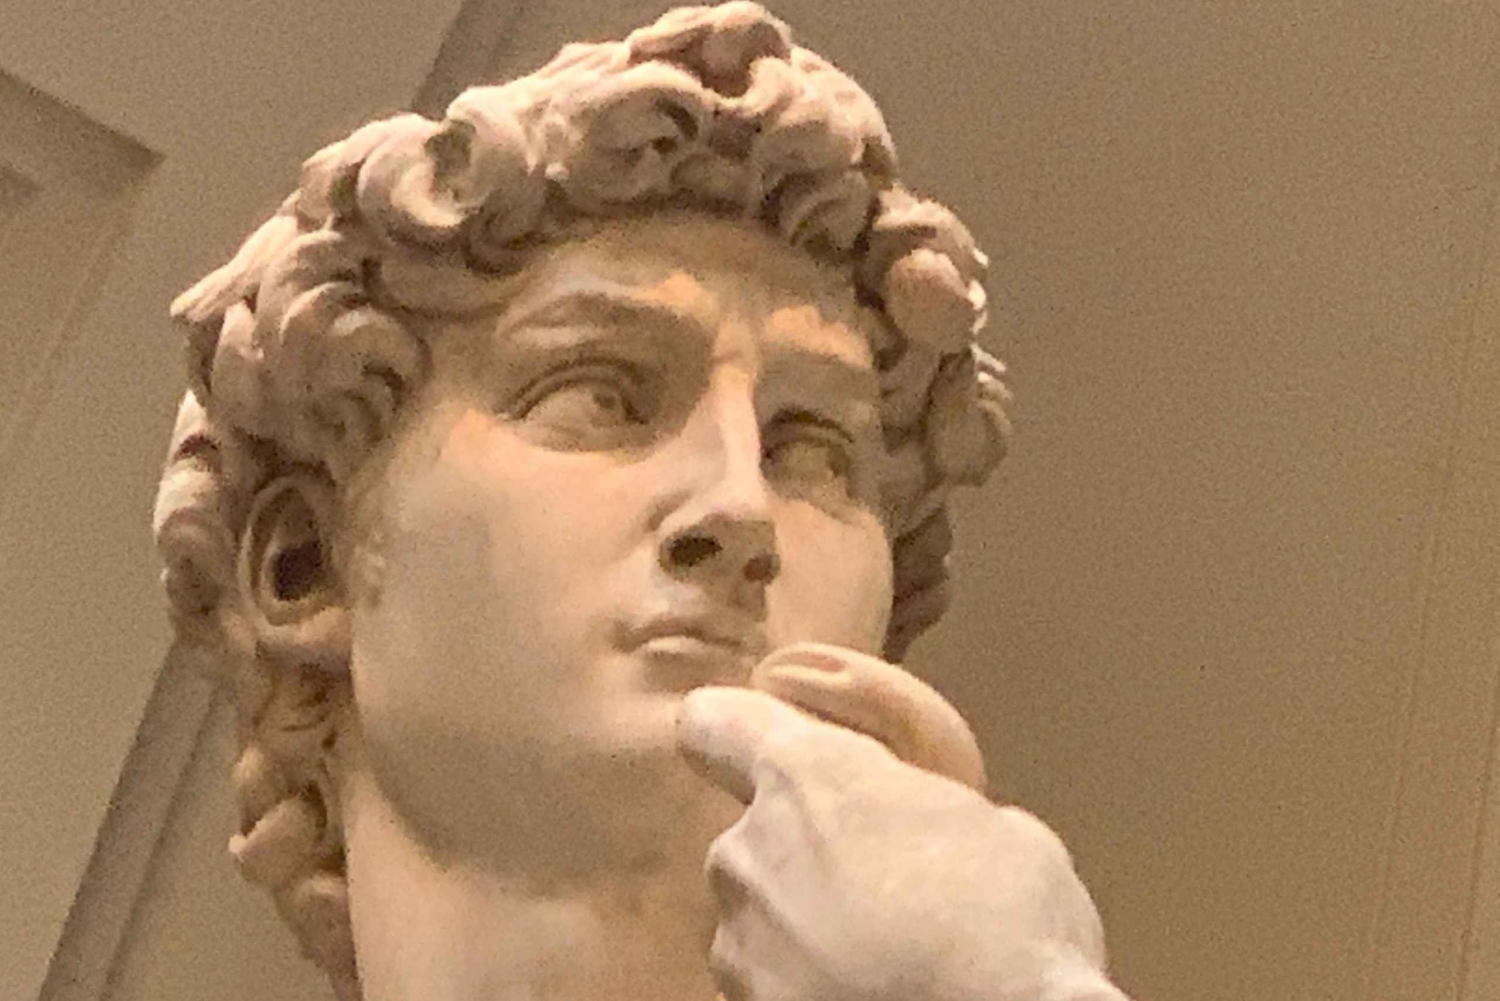 Firenze: Guidet omvisning i Accademia med Michelangelos David